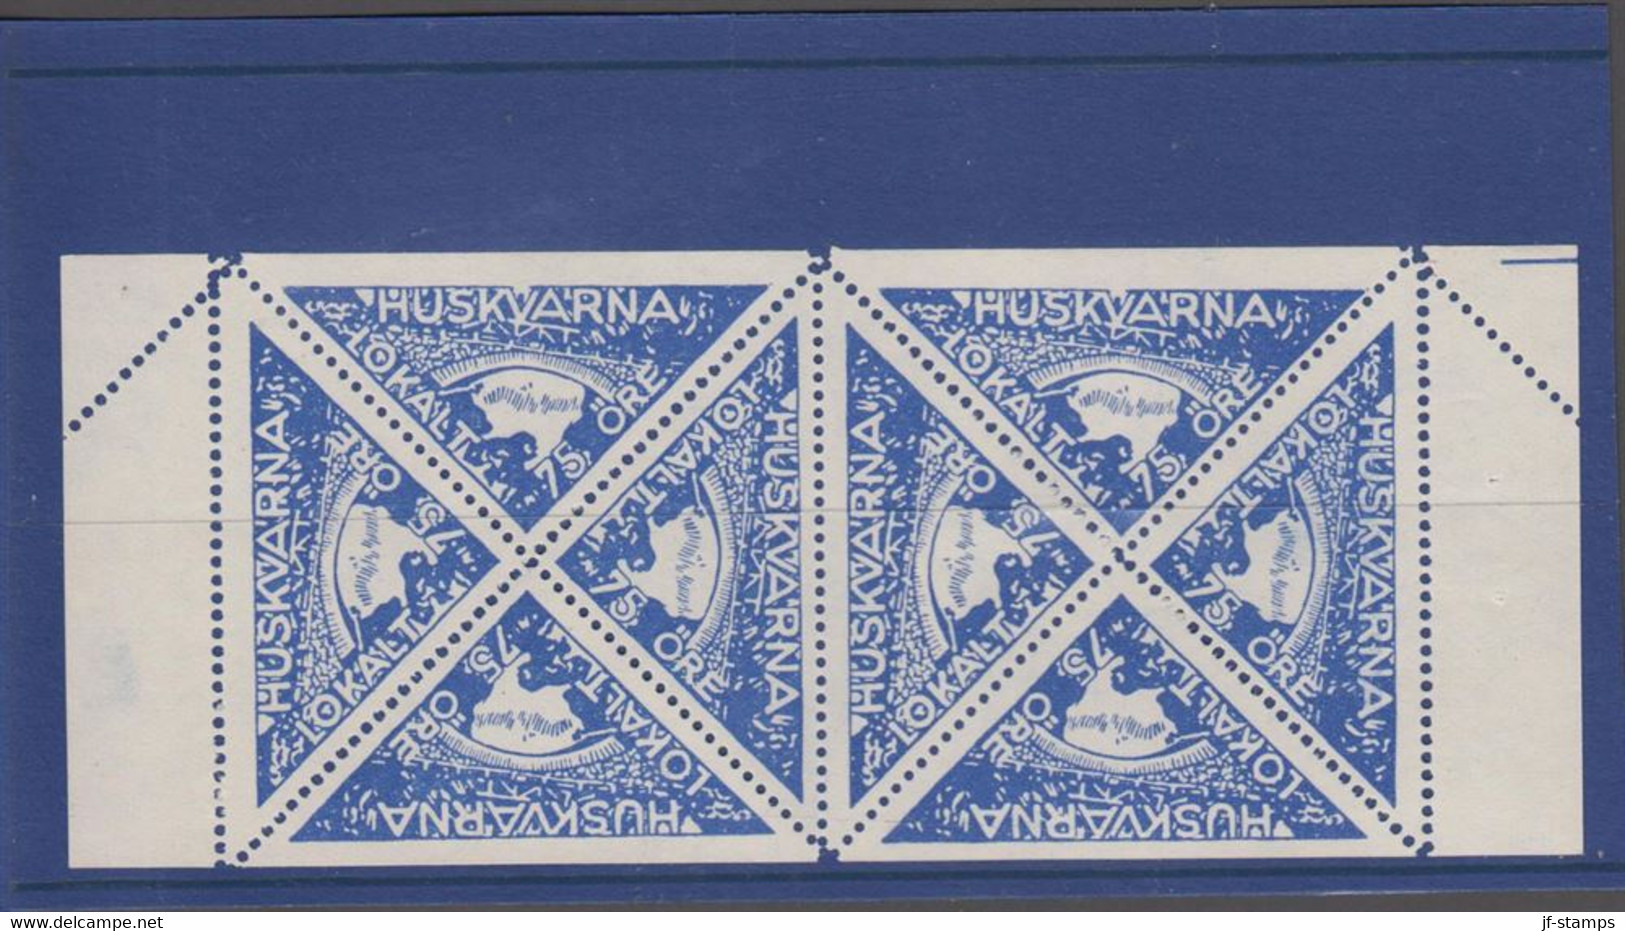 1945. SVERIGE. HUSKVARNA LOKALT 75 ÖRE In Booklet Pane With 8 Stamps Never Hinged Stamps. Unusual.  - JF520099 - Emisiones Locales